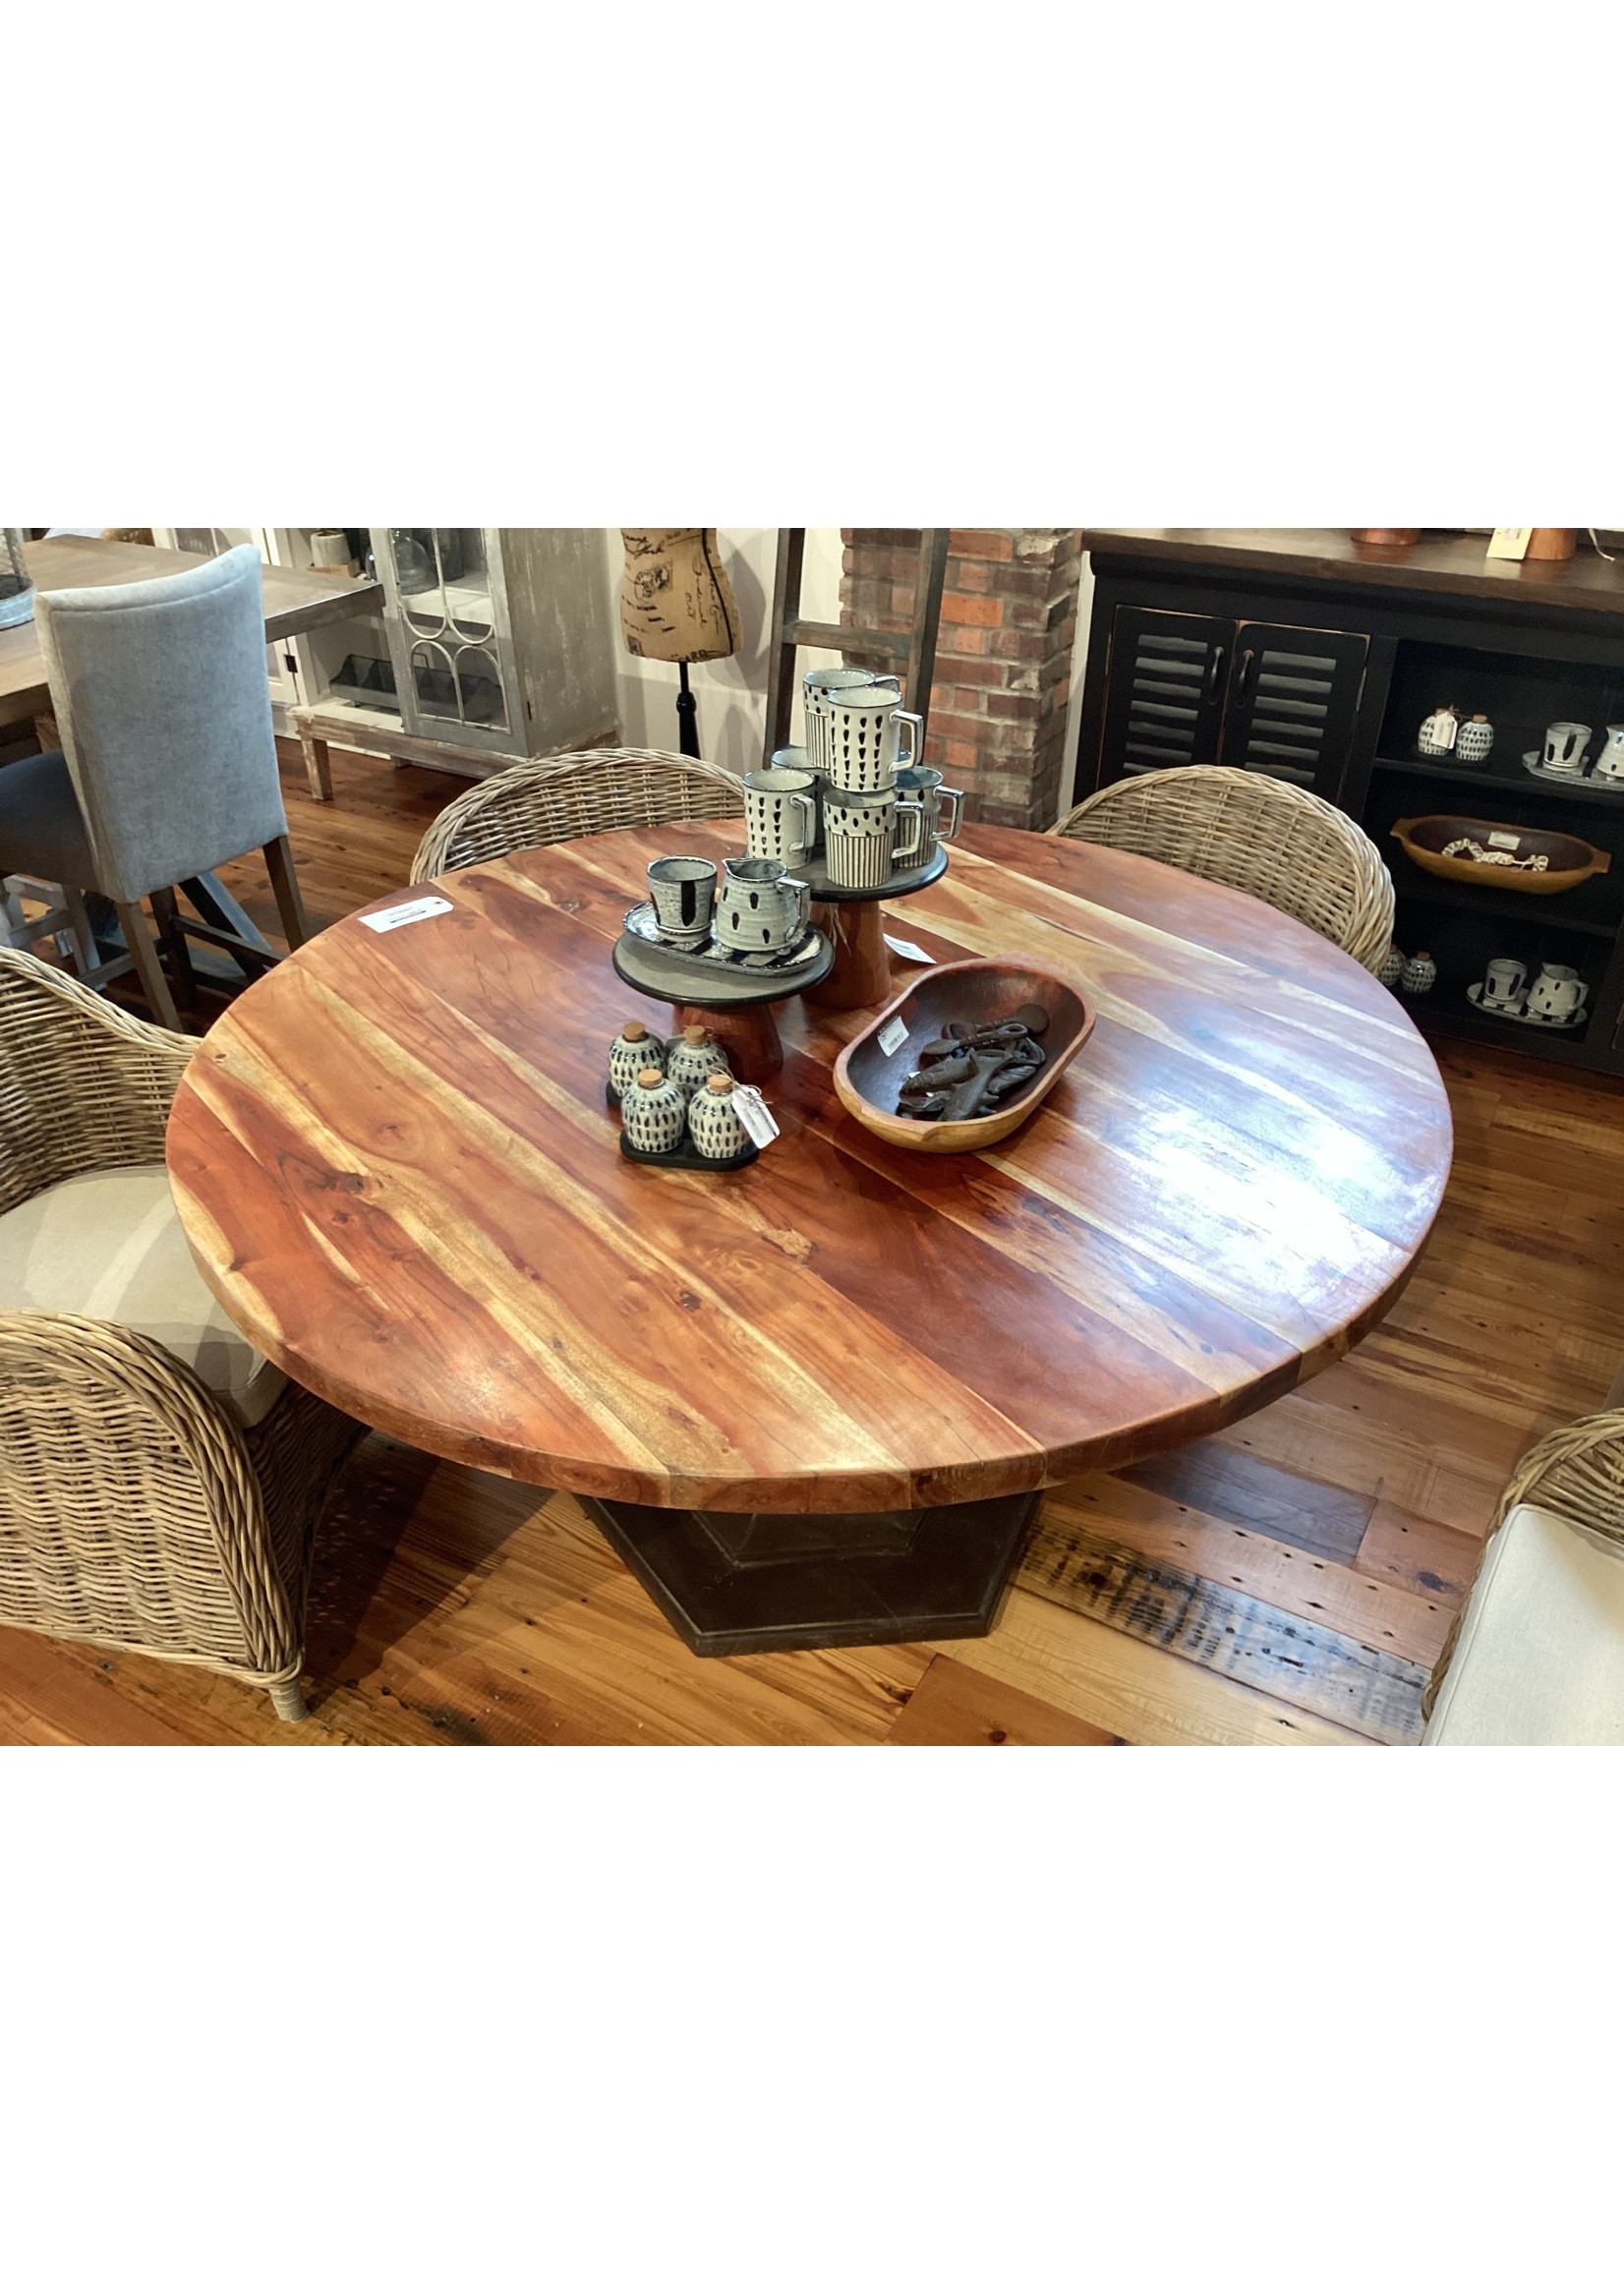 Old Wood Delaware Cedar 58" Round Table Crovato Base